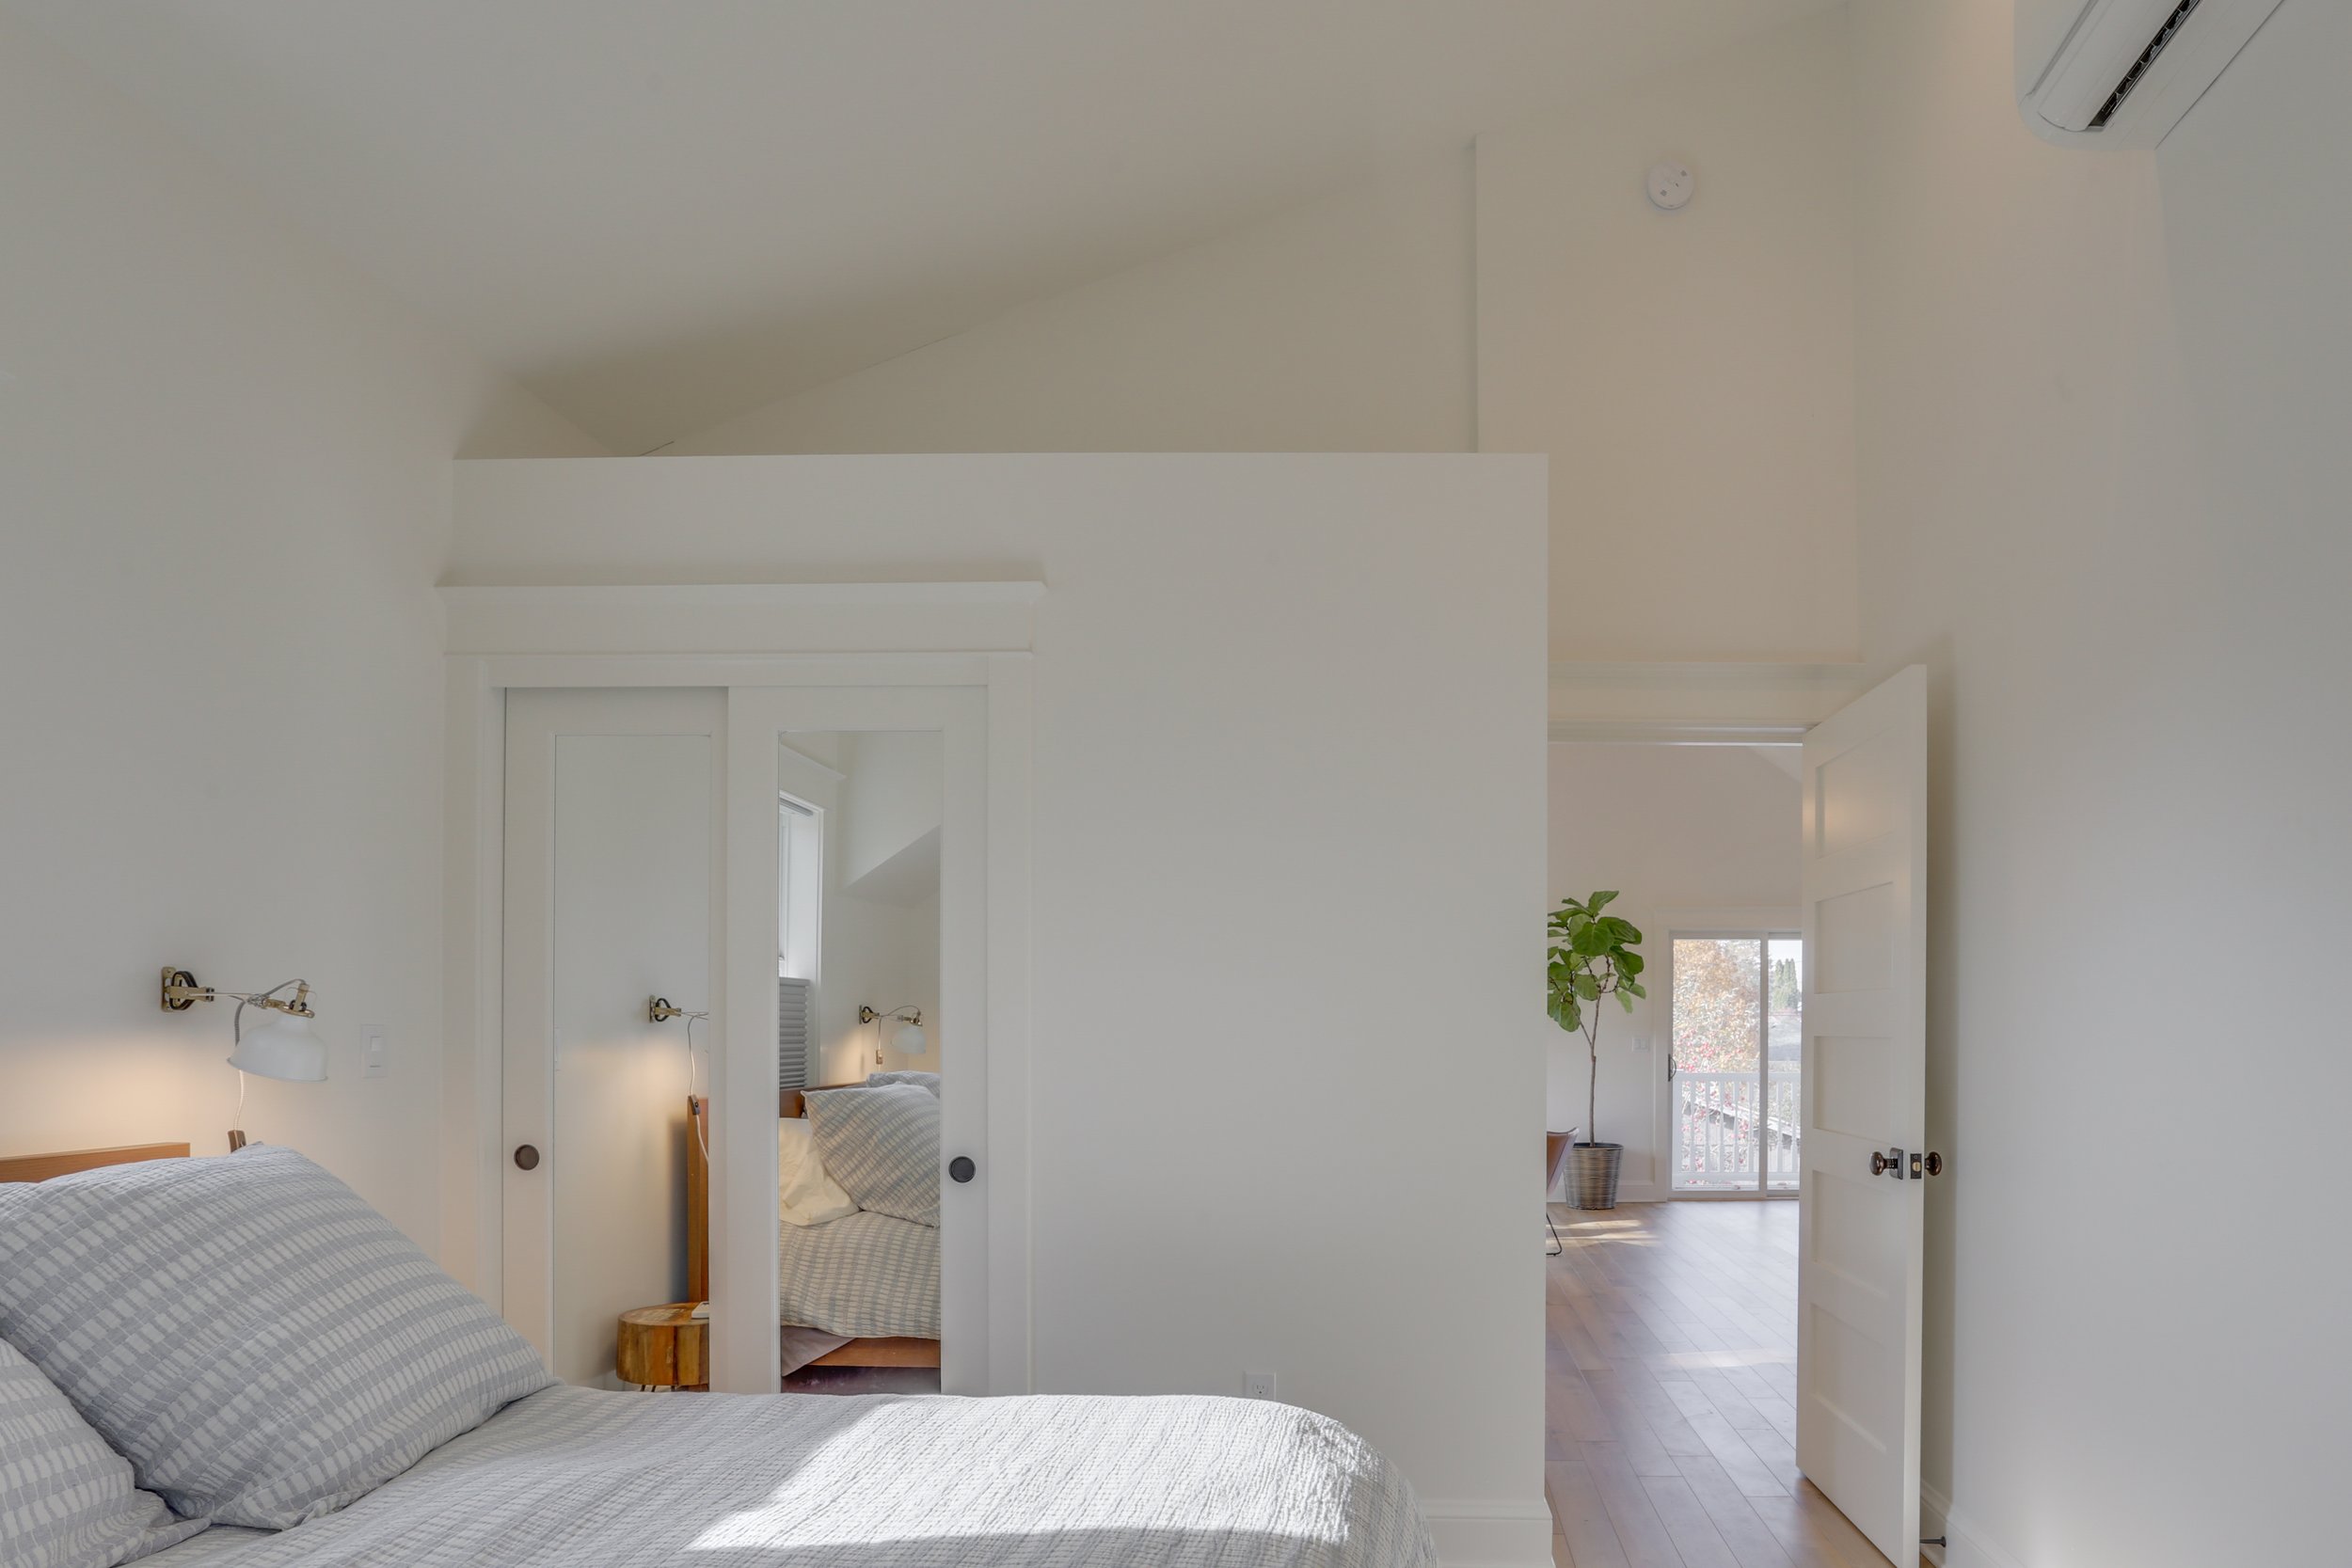 Harka-Architecture-bedroom2.jpg